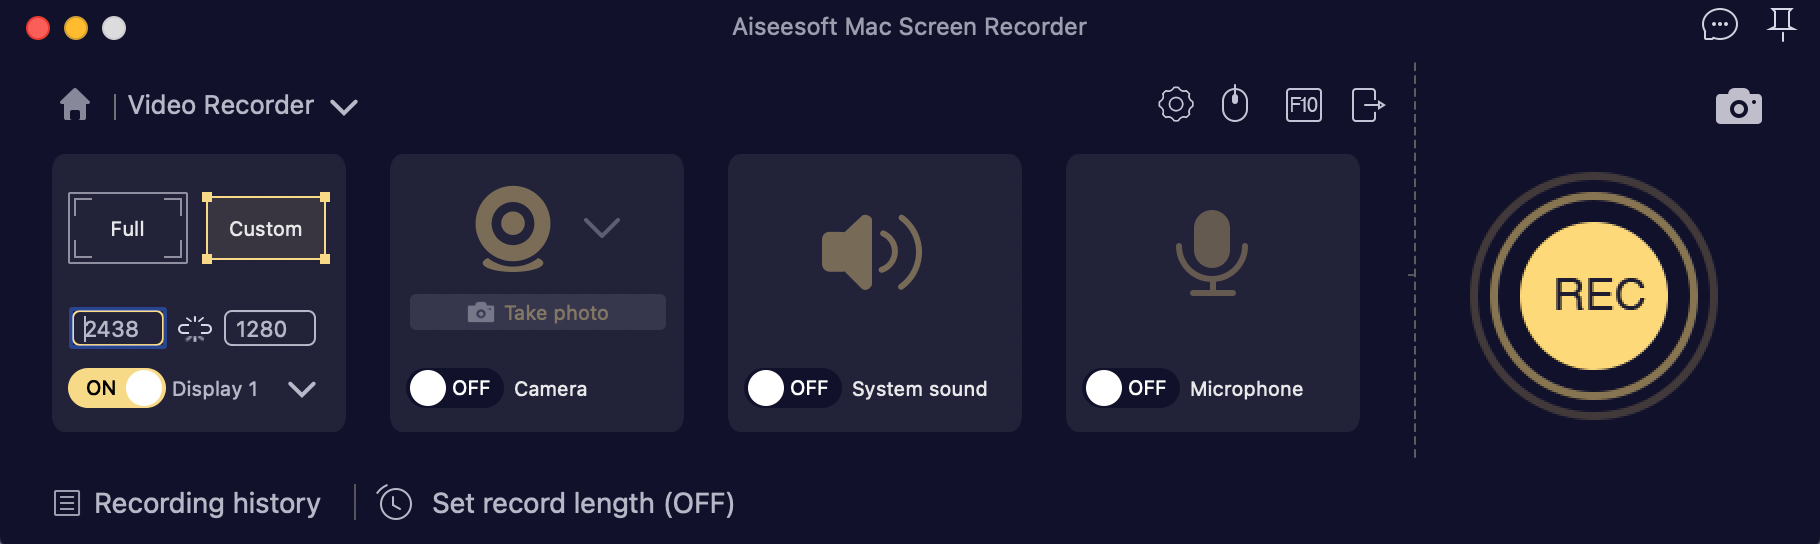 Aiseesoft Screen Recorder Mac review